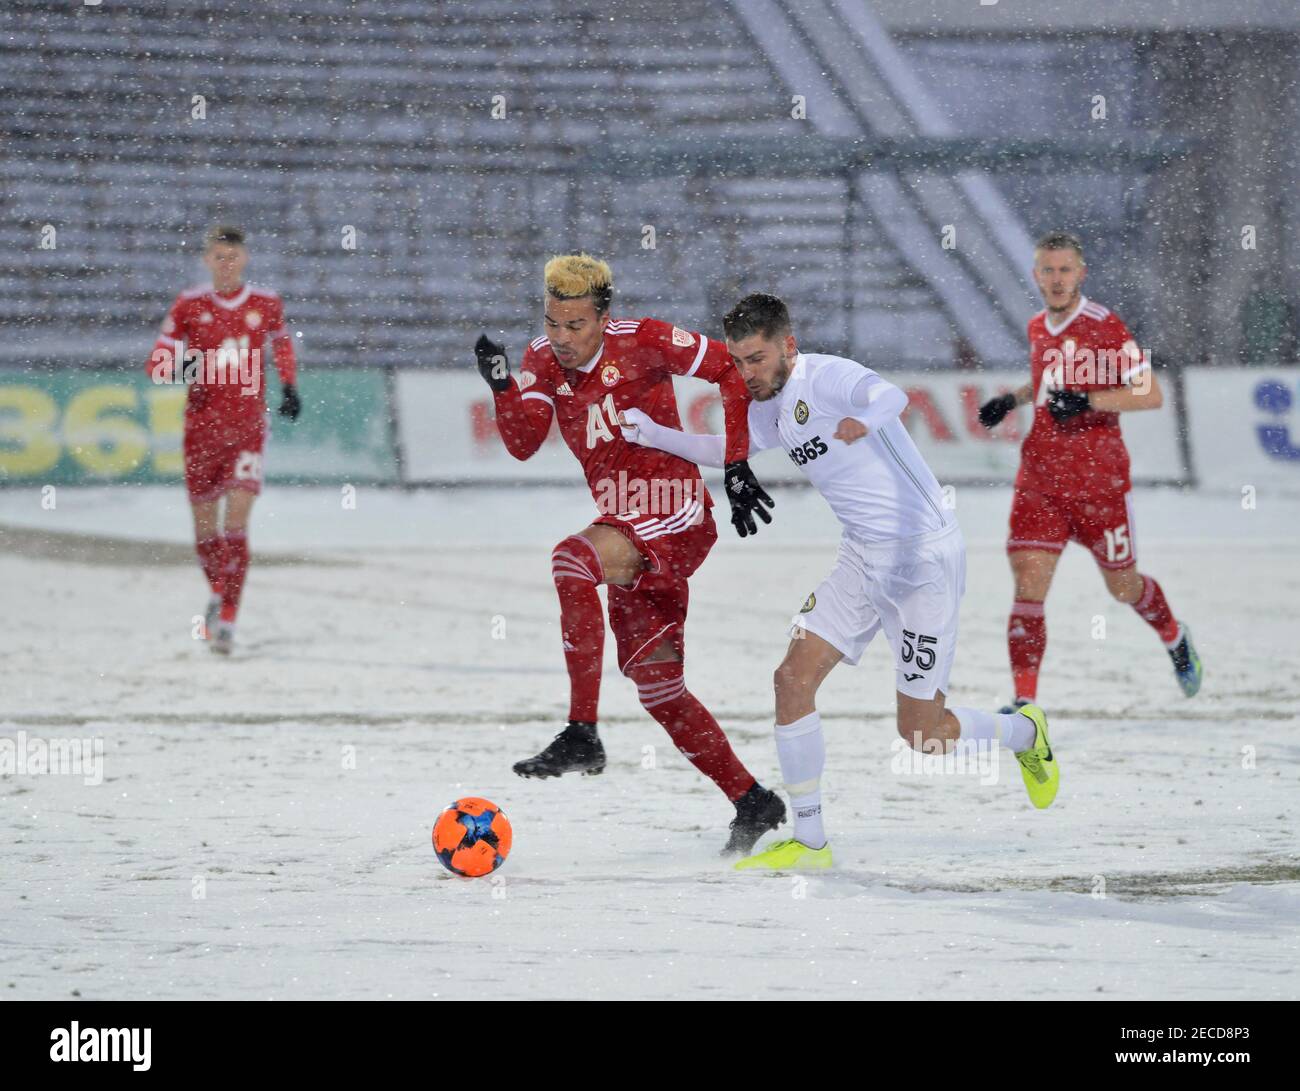 Sofia, Bulgaria - Feb 13 2021: Penaranda and Hristov fighting for the ball during a snowy football match between CSKA Sofia and Slavia Stock Photo